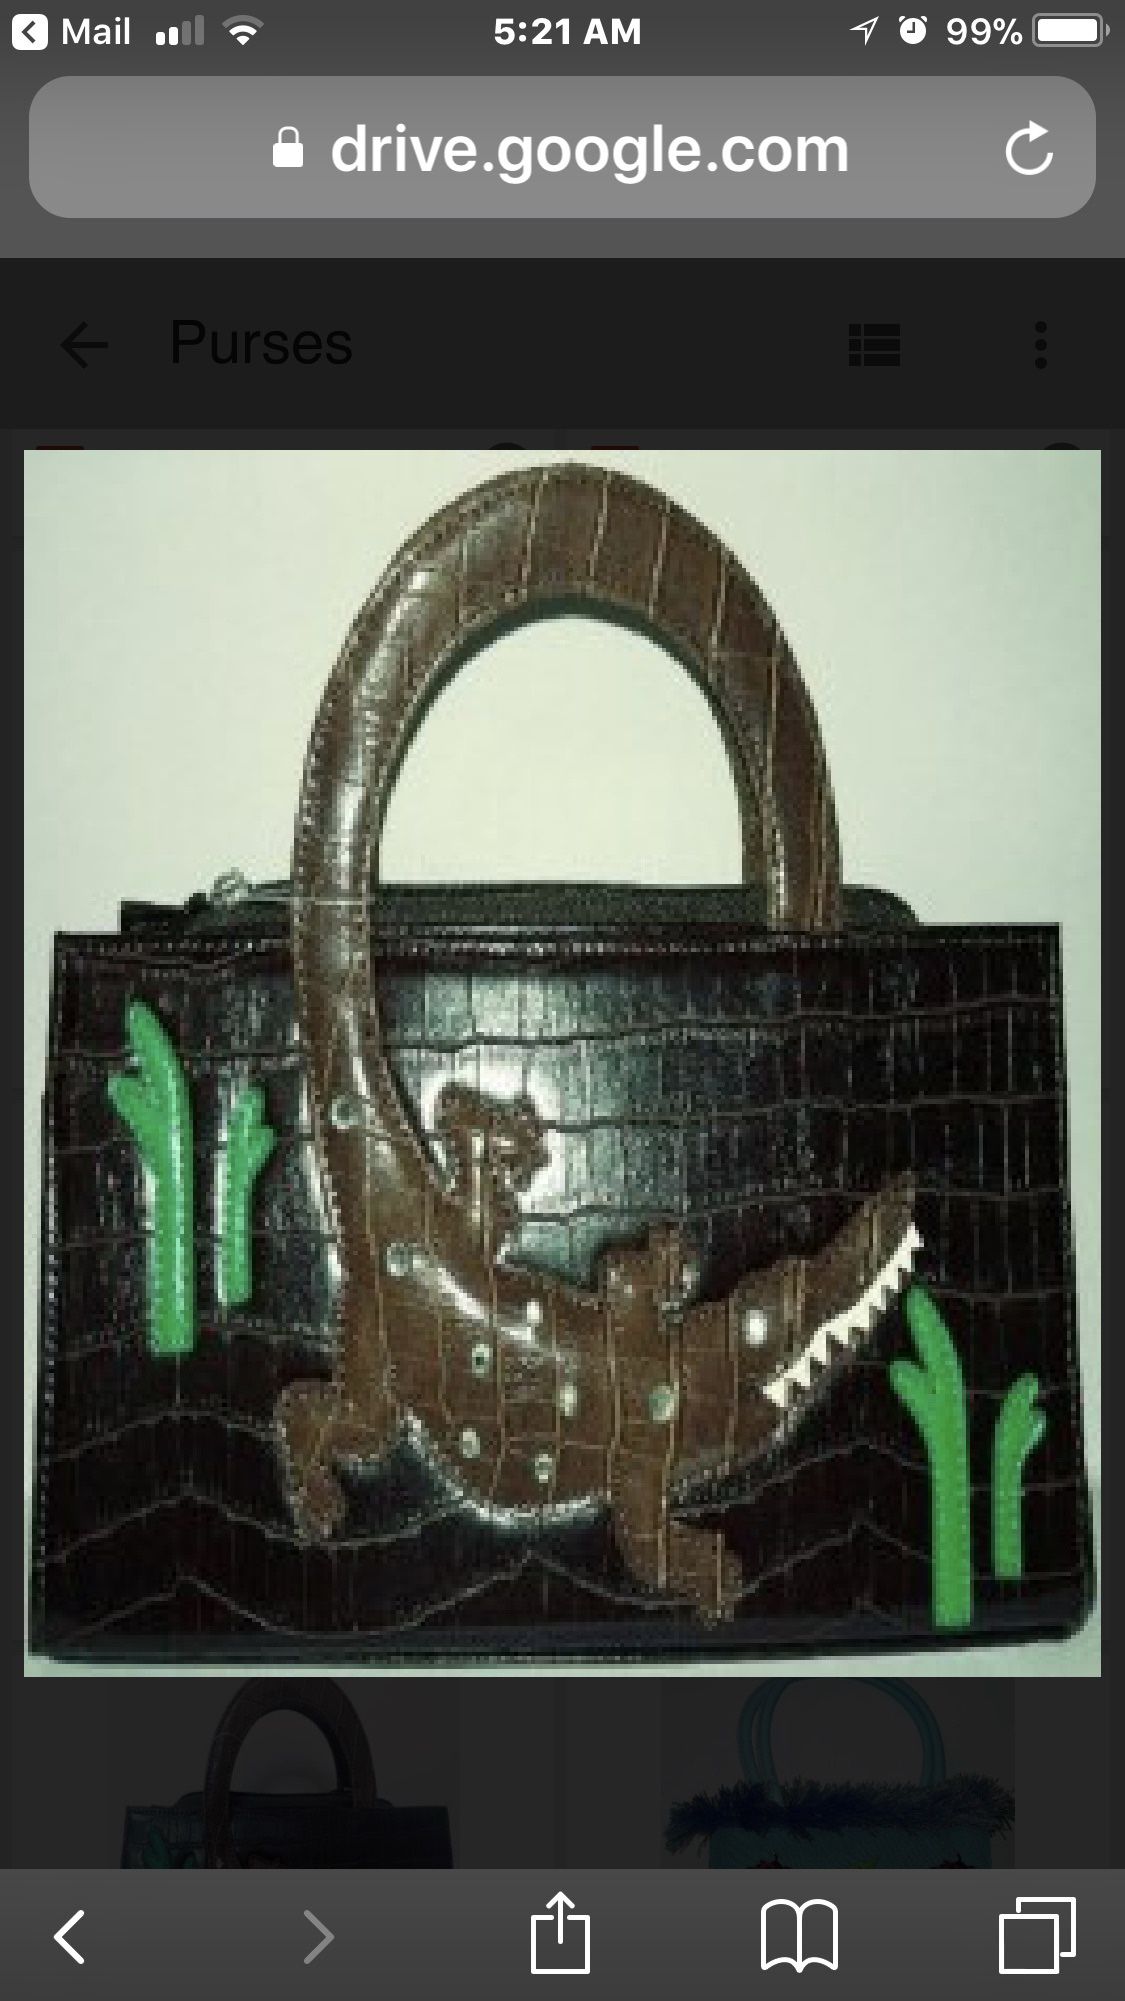 Brand new alligator purse